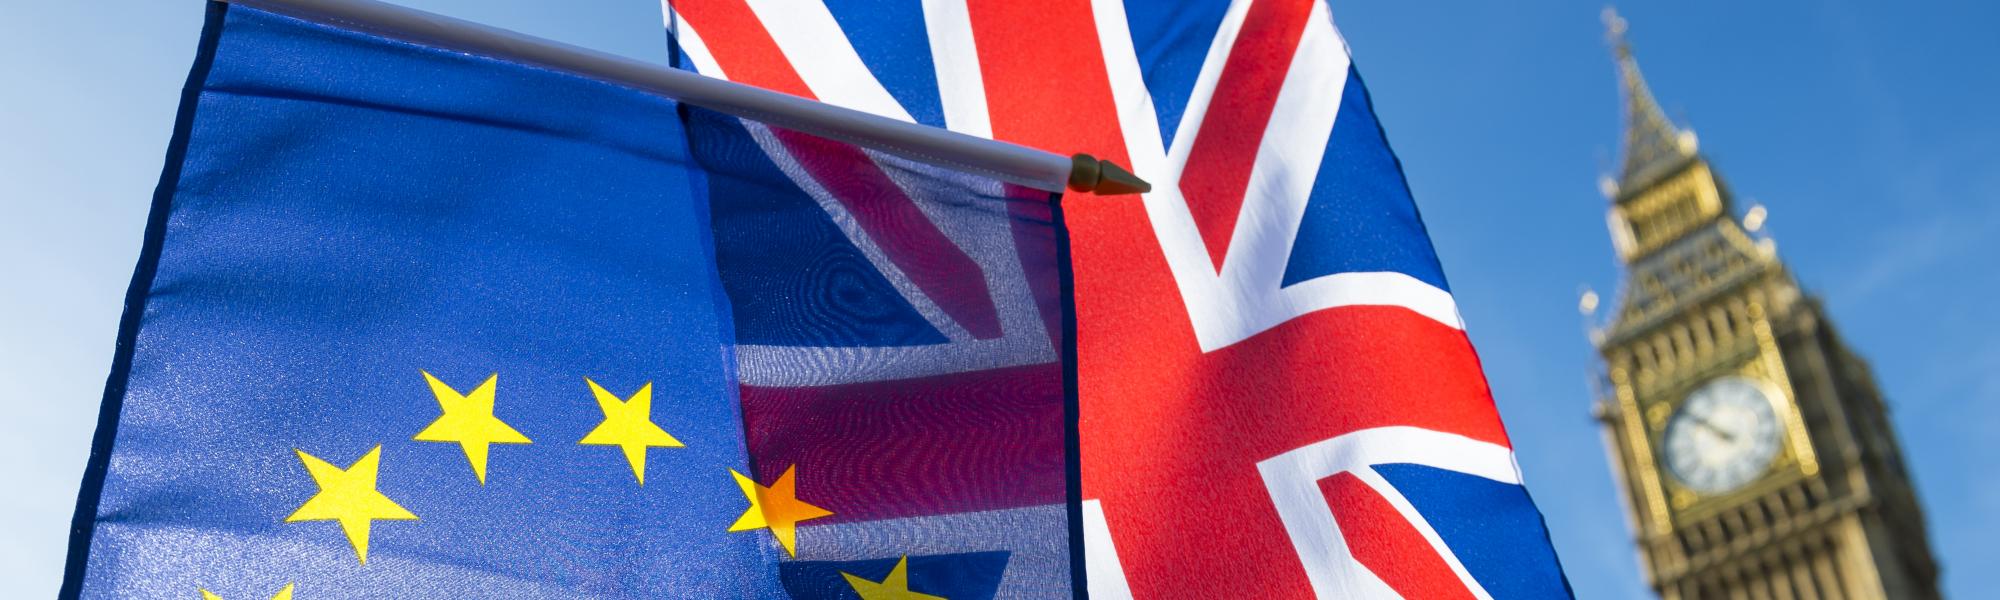 Brexit and EU flag with Big Ben